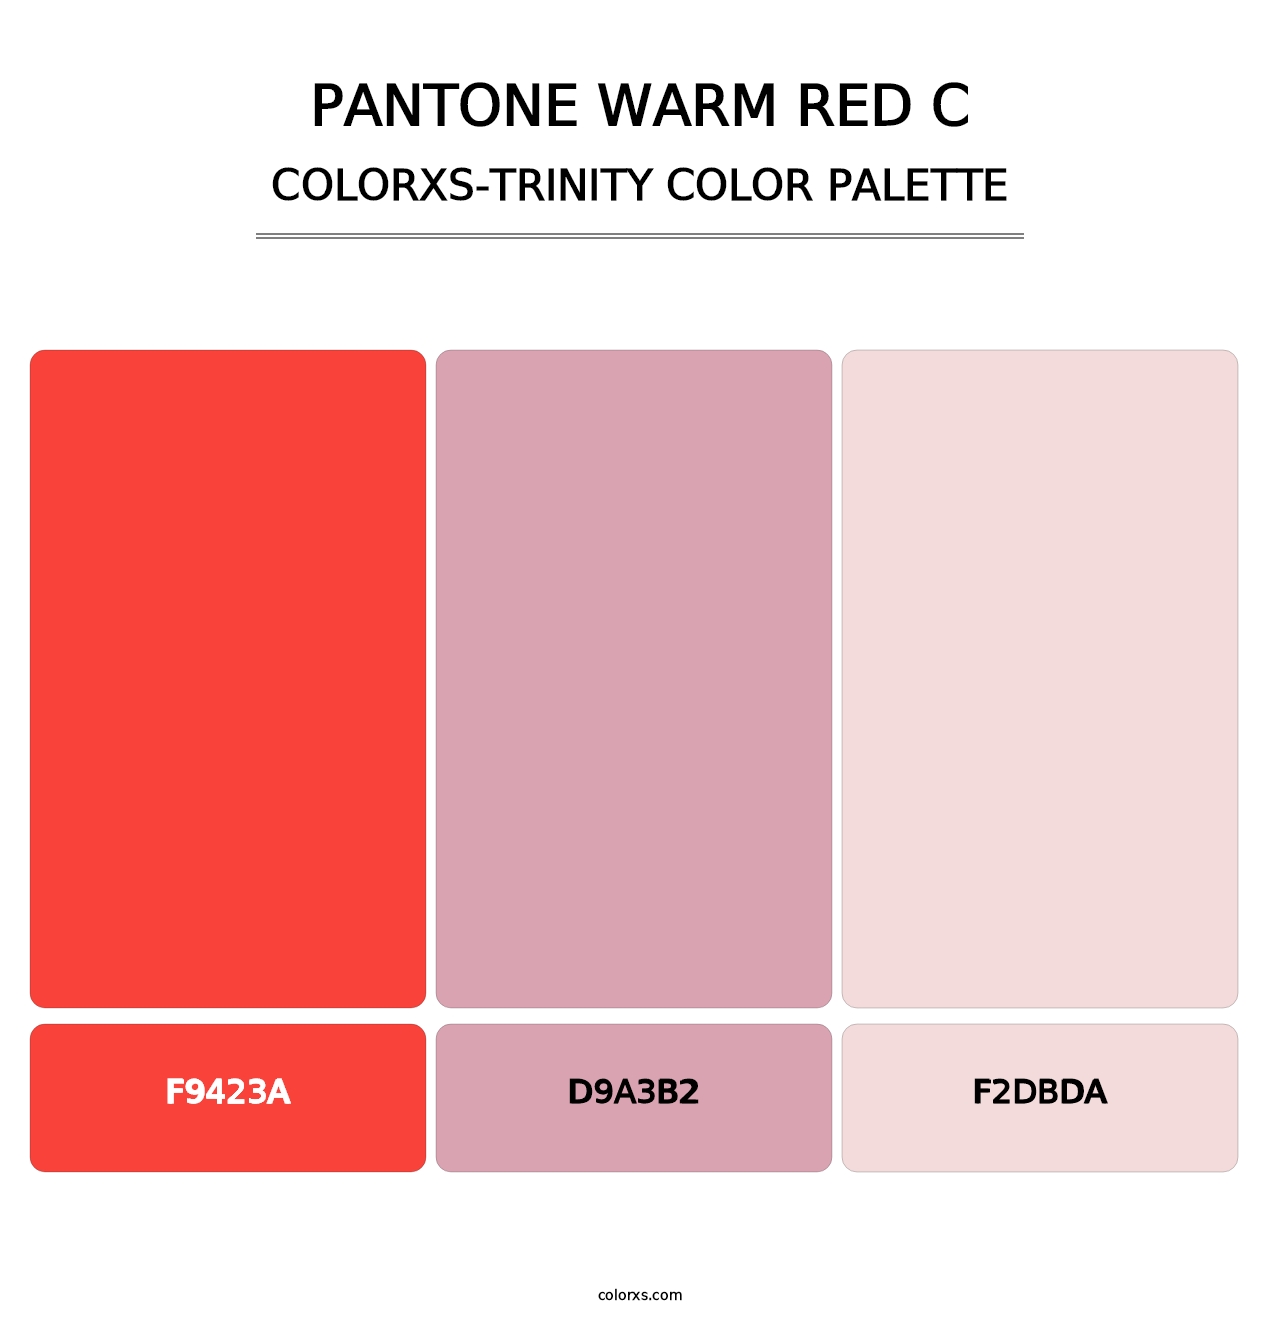 PANTONE Warm Red C - Colorxs Trinity Palette